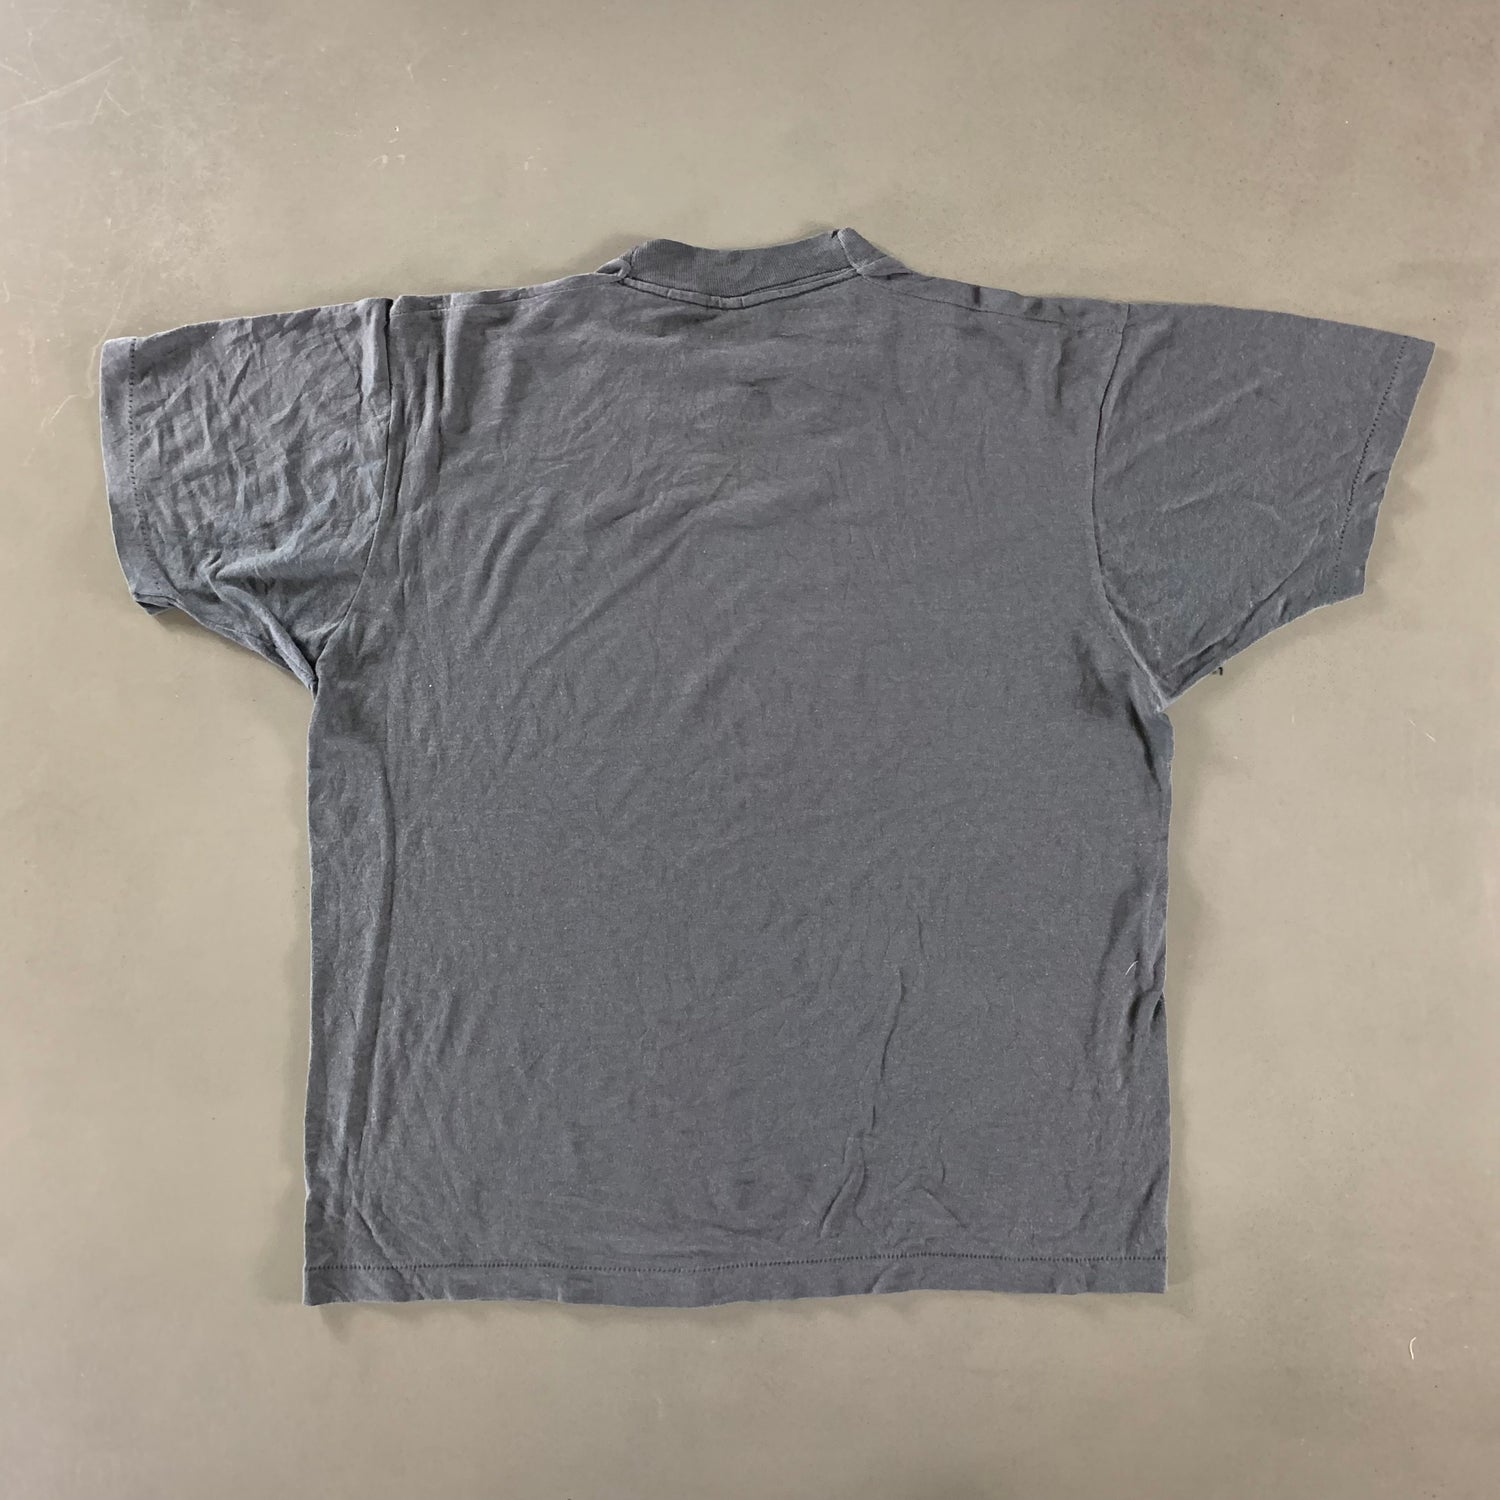 Vintage 1984 T-shirt size Large